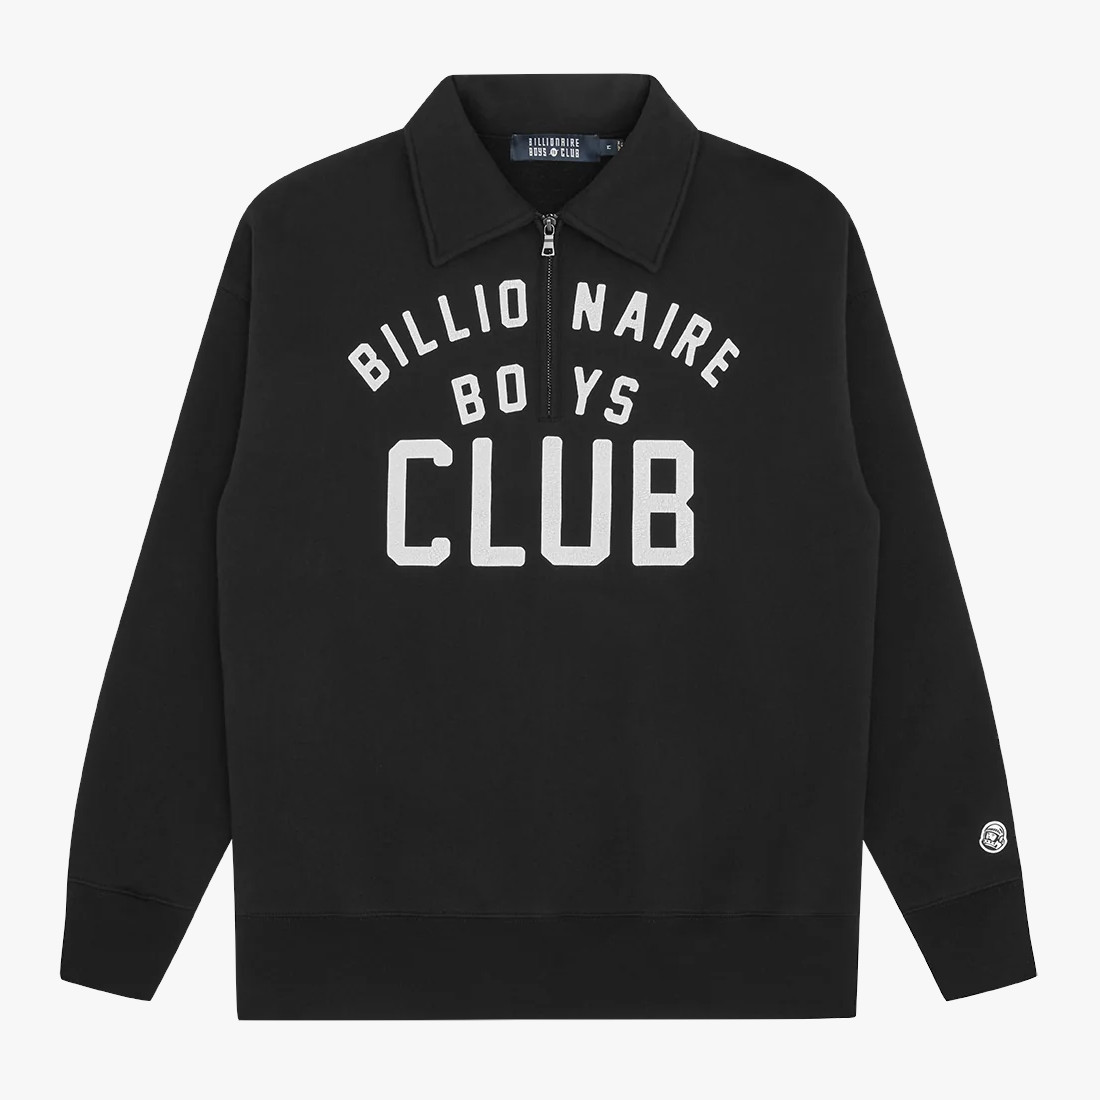 Billionaire Boys Club Collared Half Zip Sweater Black